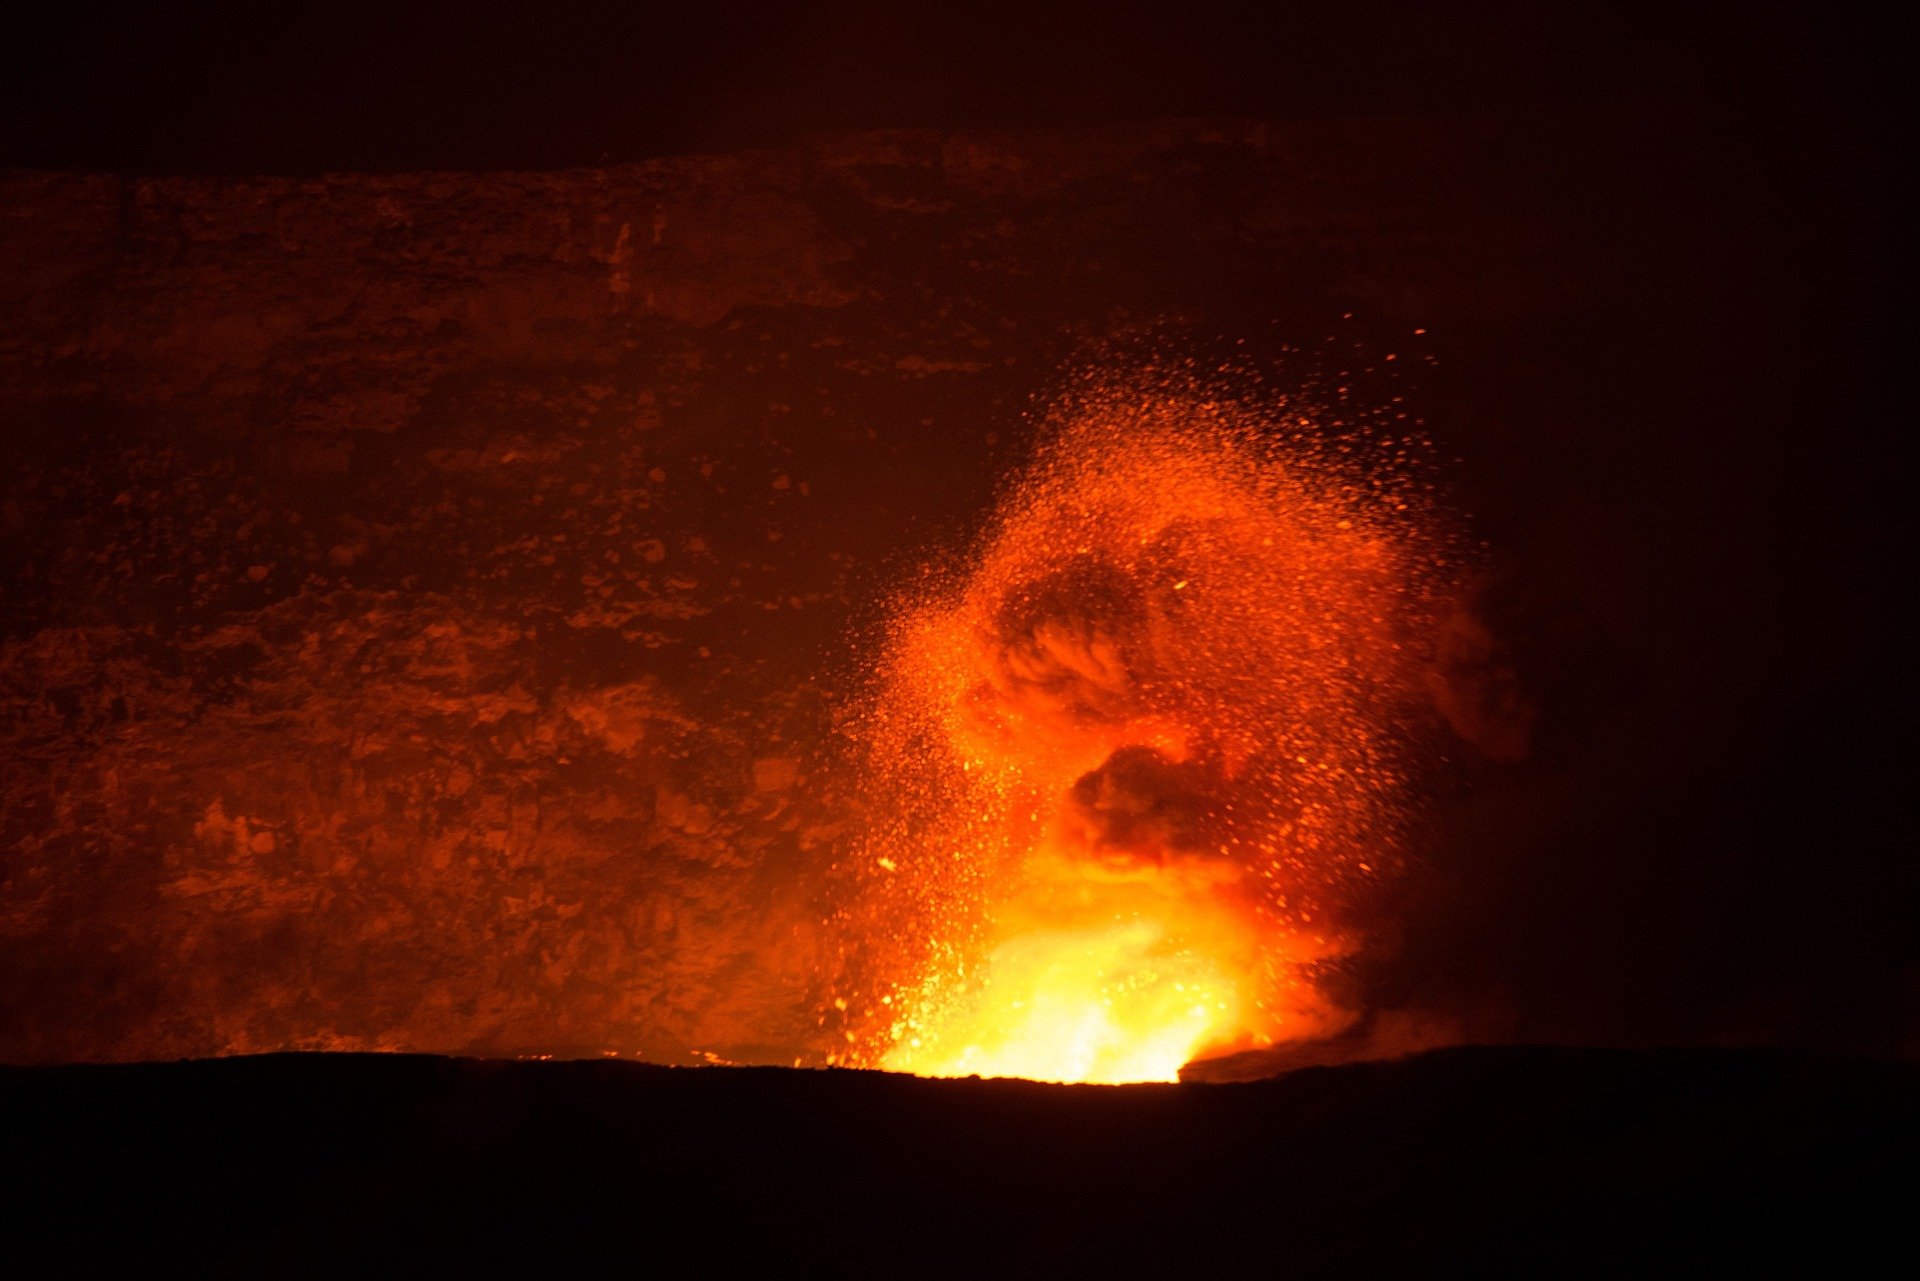 Volcán en erupción. || Fuente: Pixabay